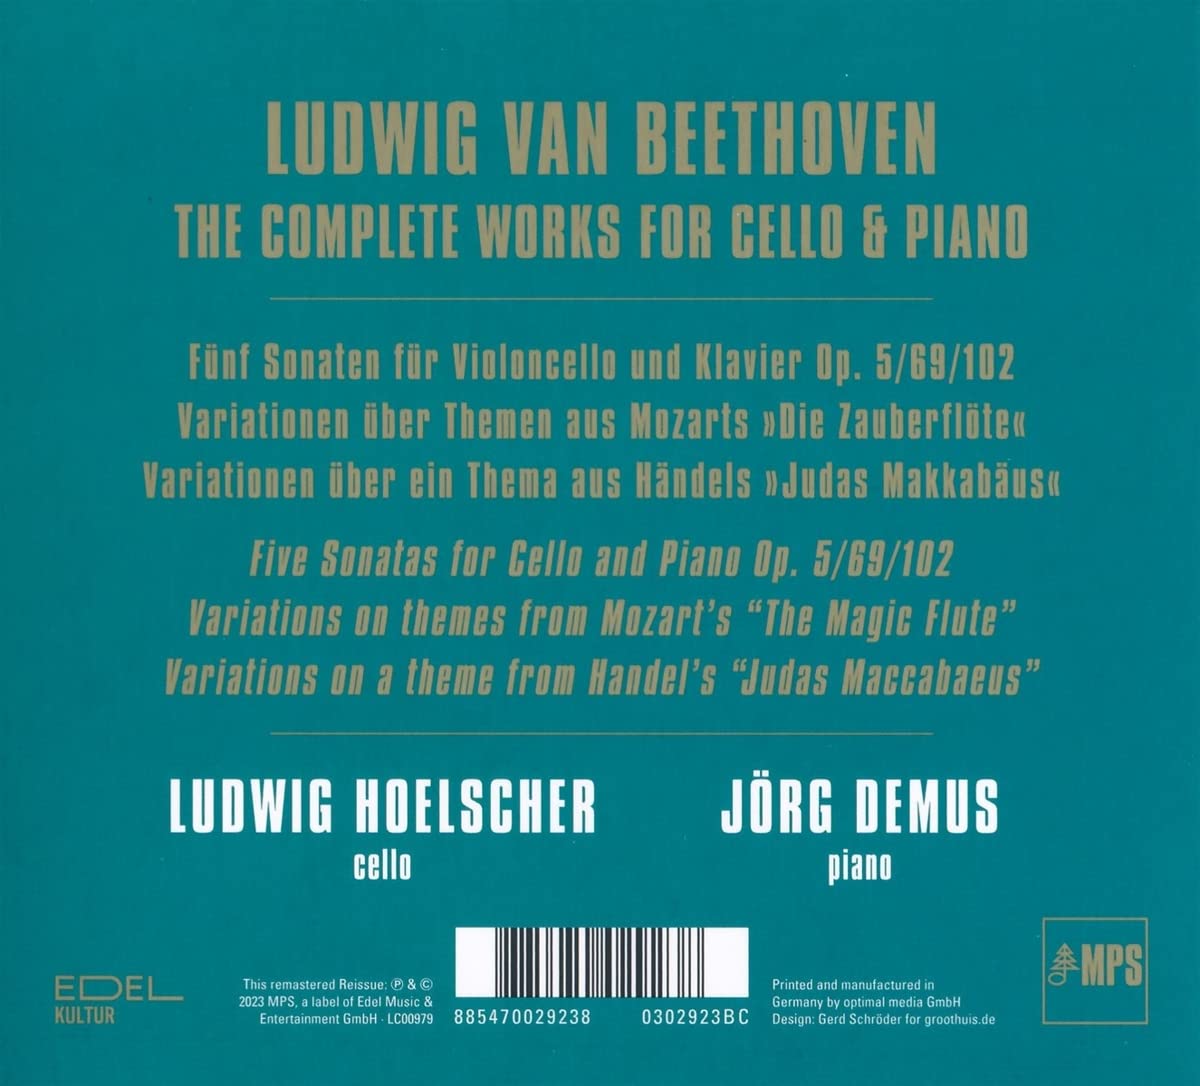 Ludwig Hoelscher / Jorg Demus 베토벤: 첼로 소나타 전곡, 첼로와 피아노를 위한 변주곡 (Beethoven: The Complete Works for Cello & Piano)